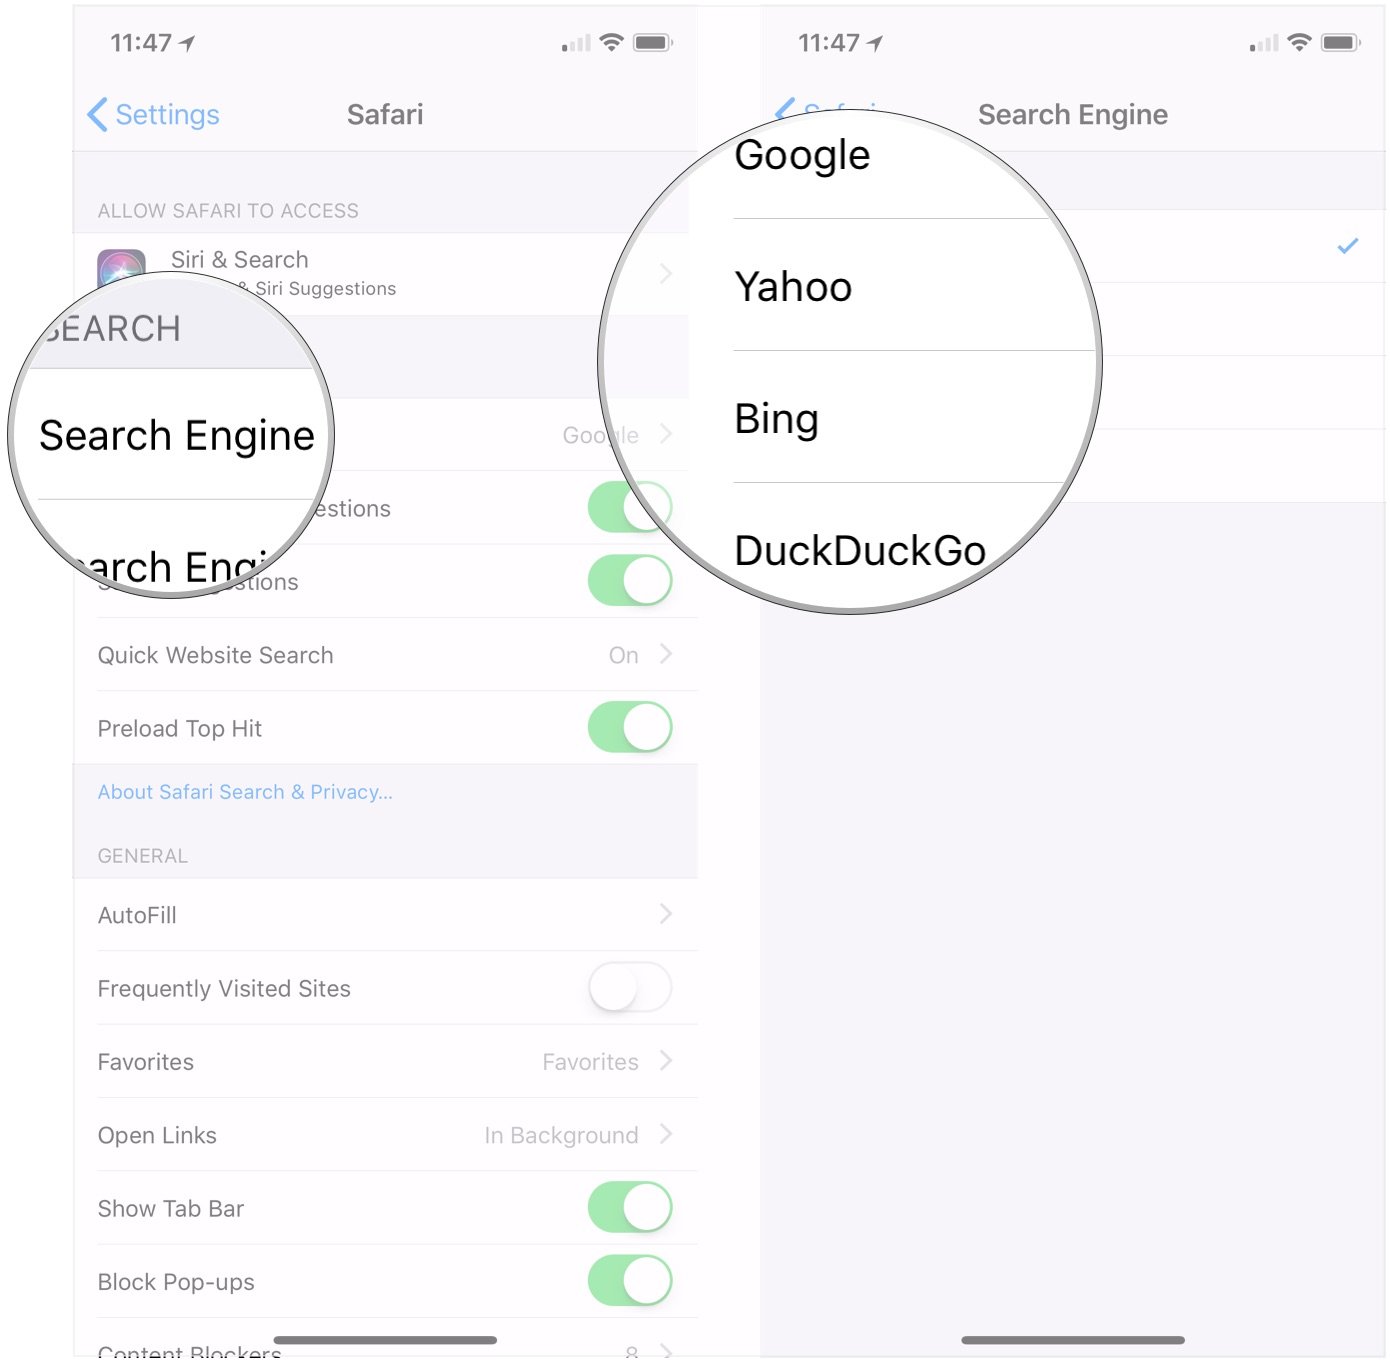 Cambiar motor de búsqueda en iPhone: toca Motor de búsqueda y selecciona tu motor de búsqueda